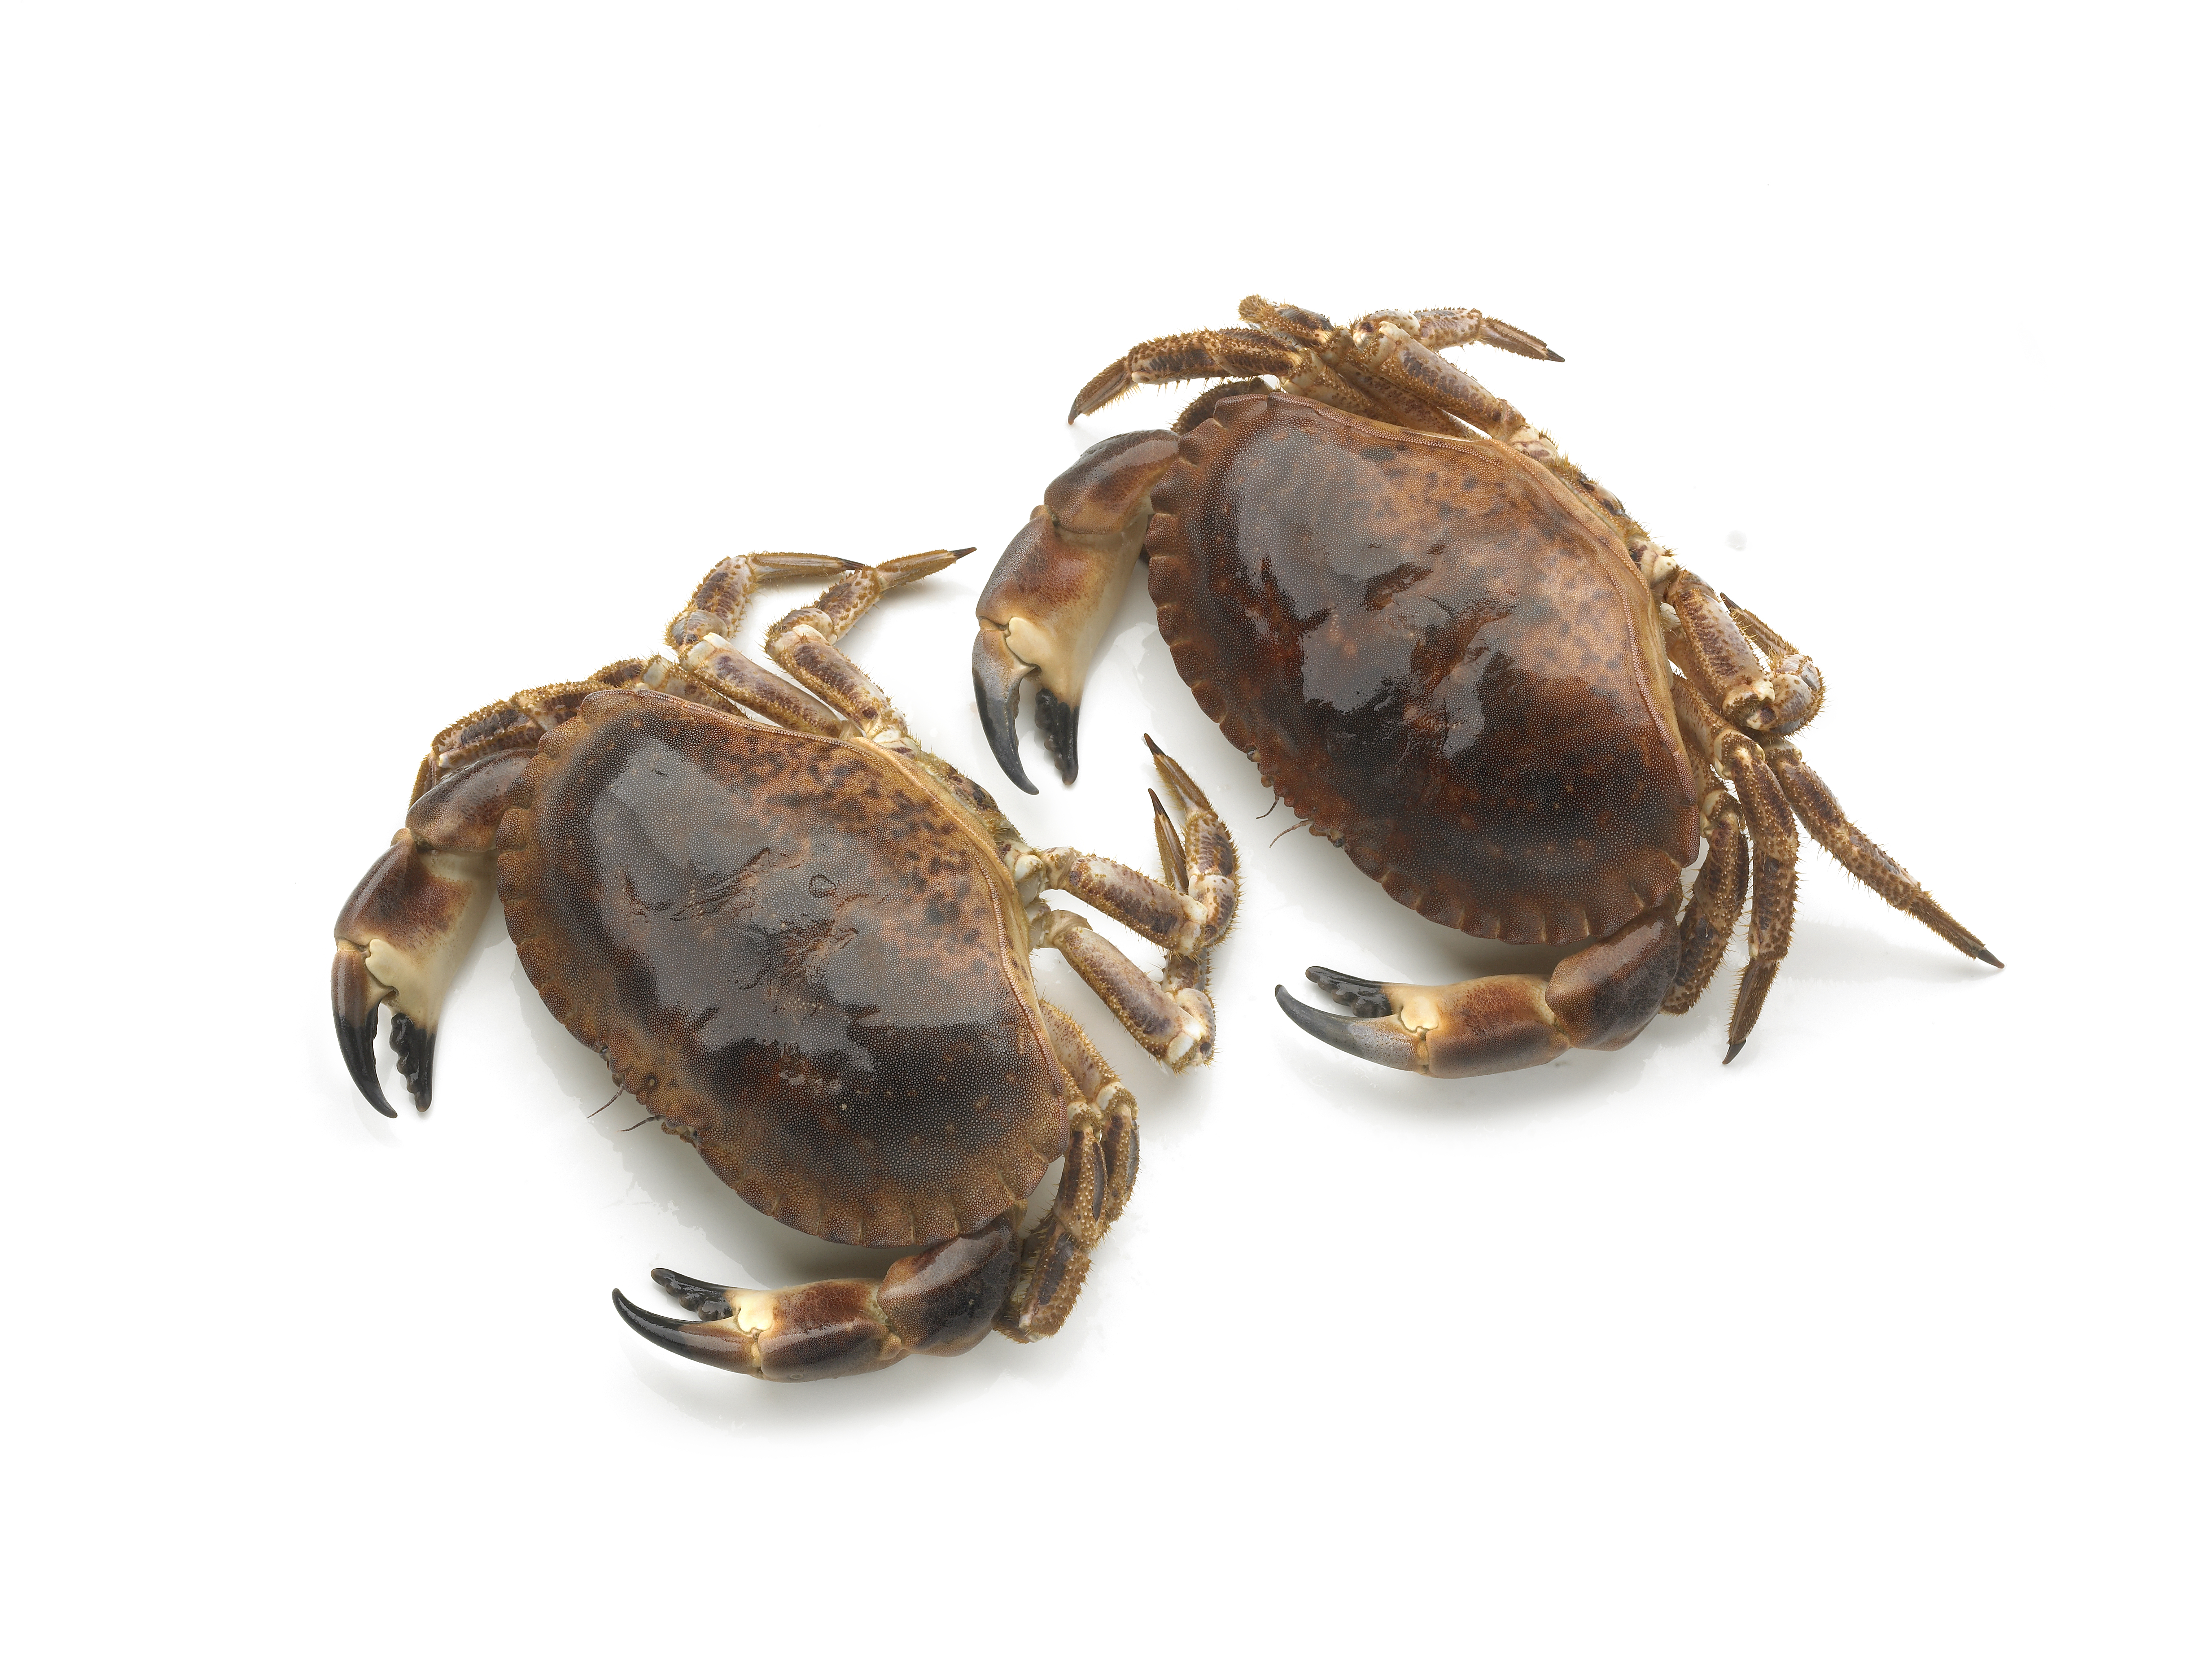 61642 Crab tourteau geportioneerd